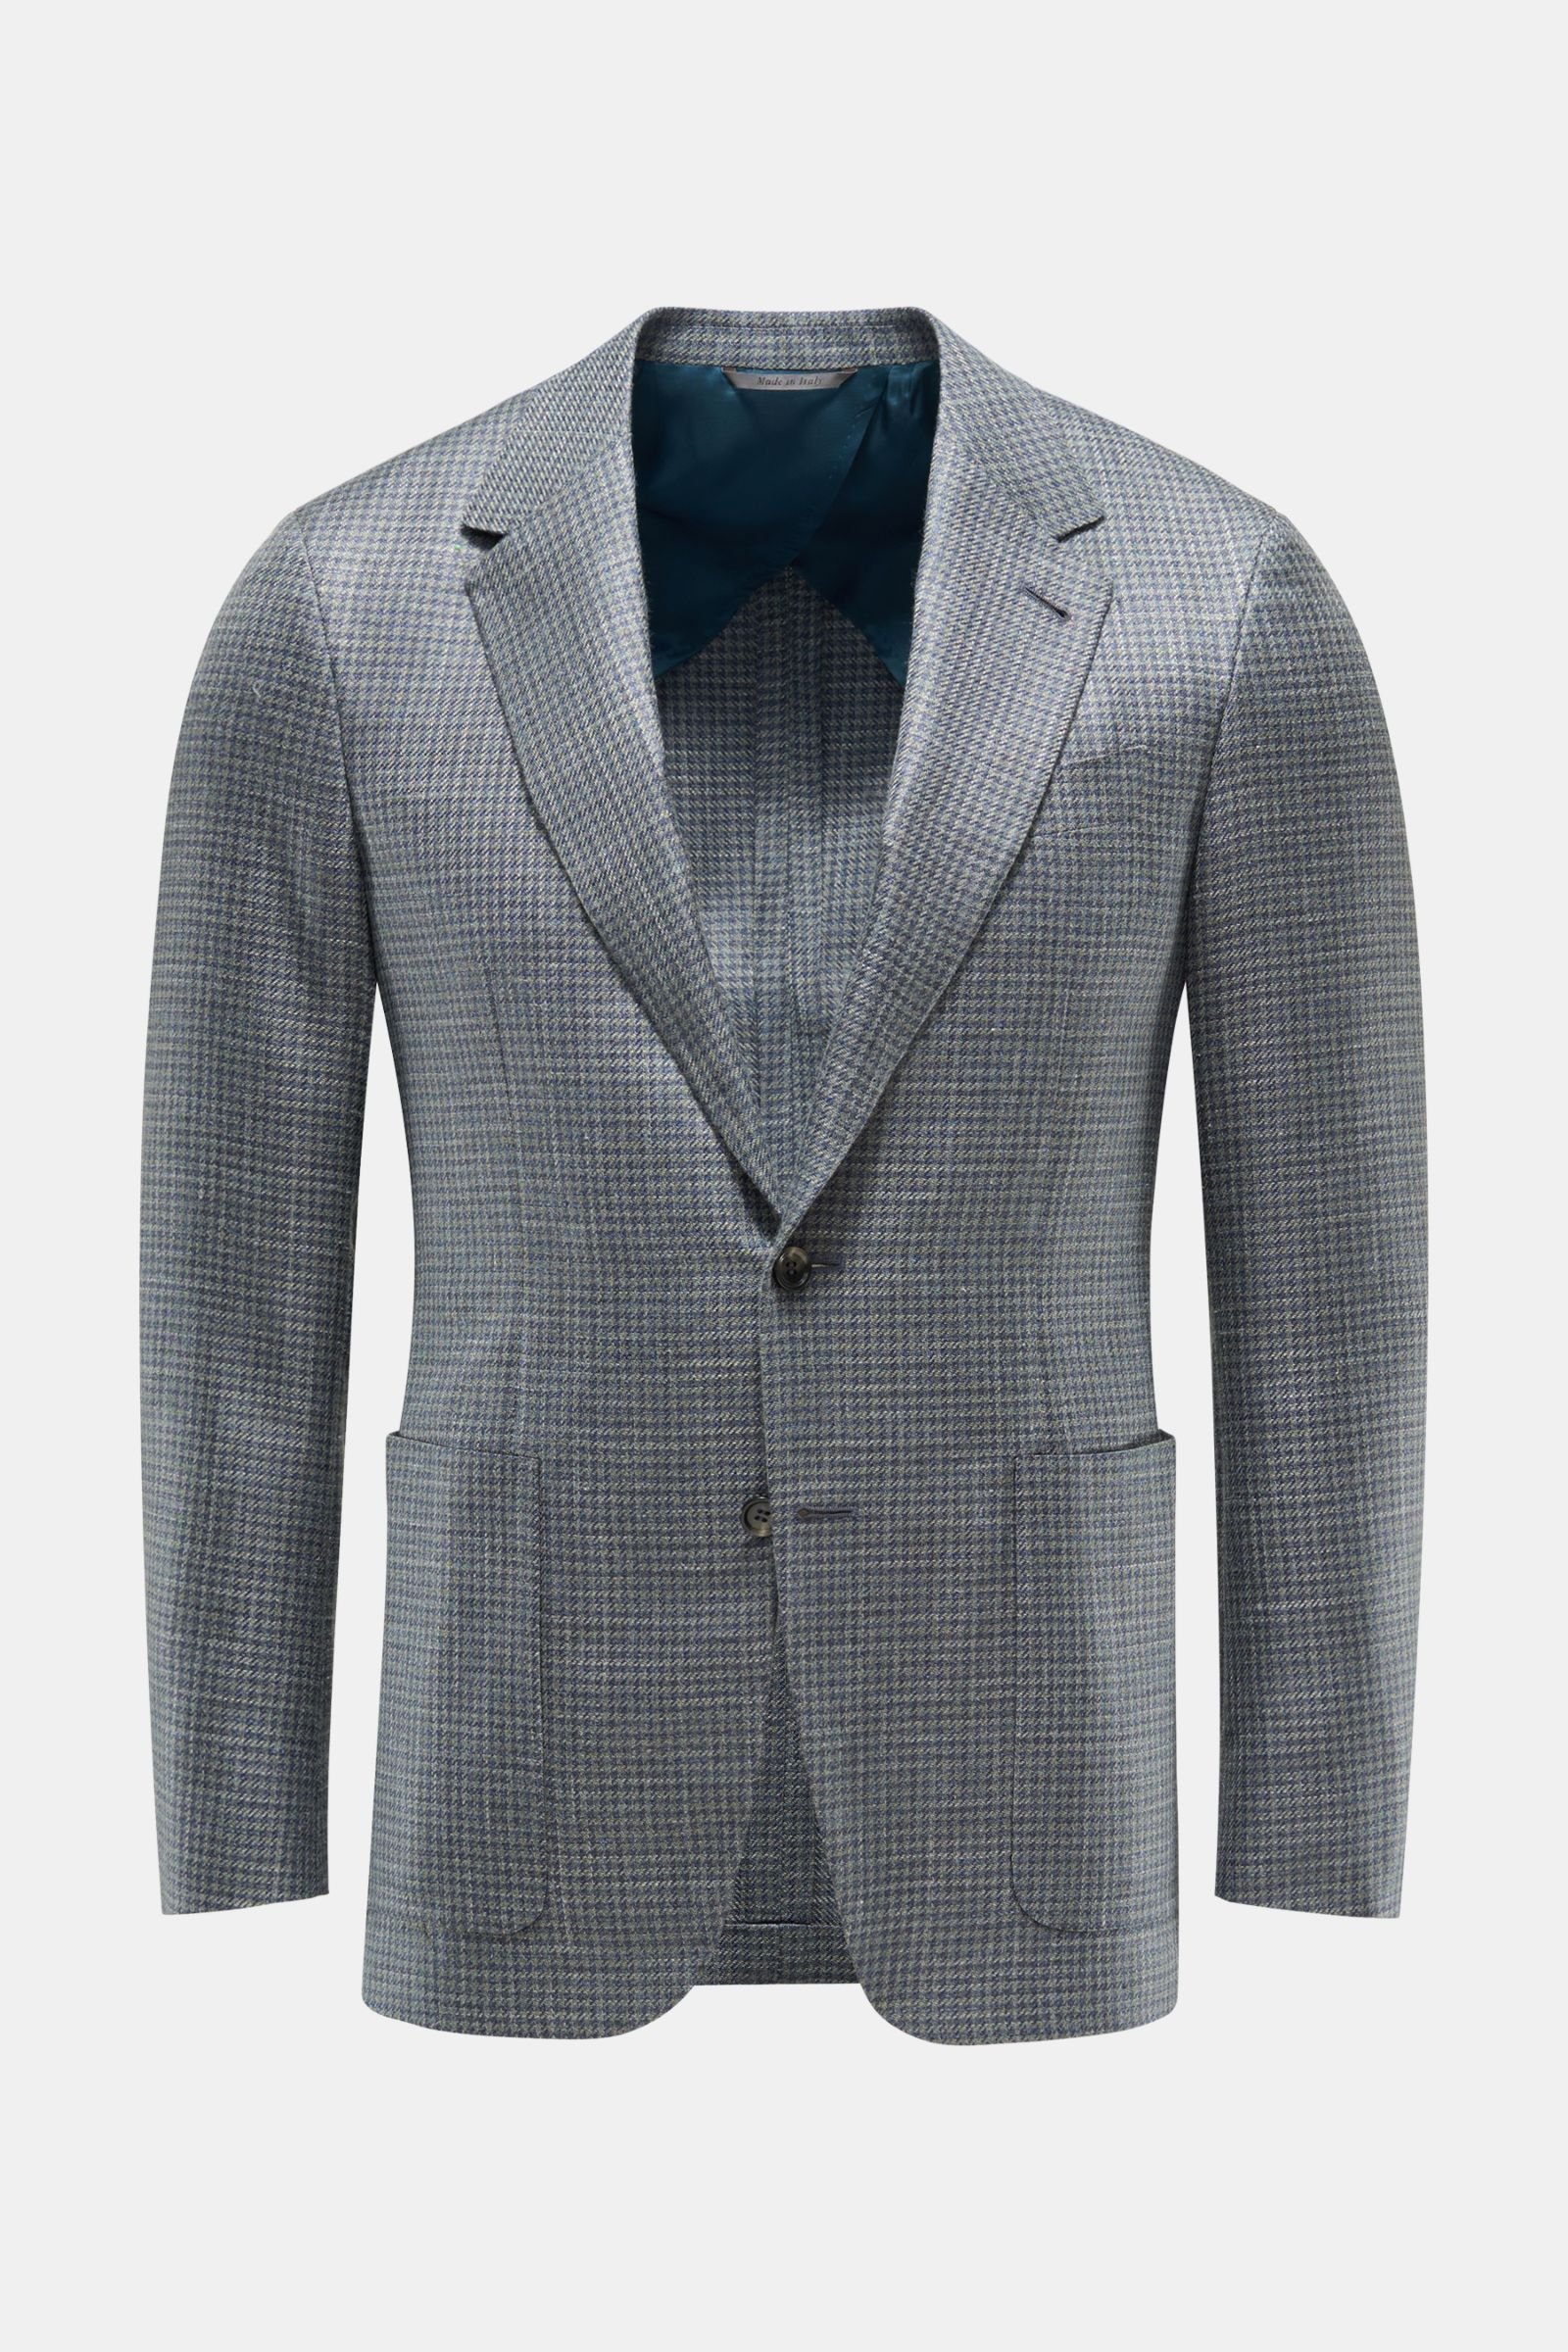 Smart-casual jacket grey-blue/grey-green checked